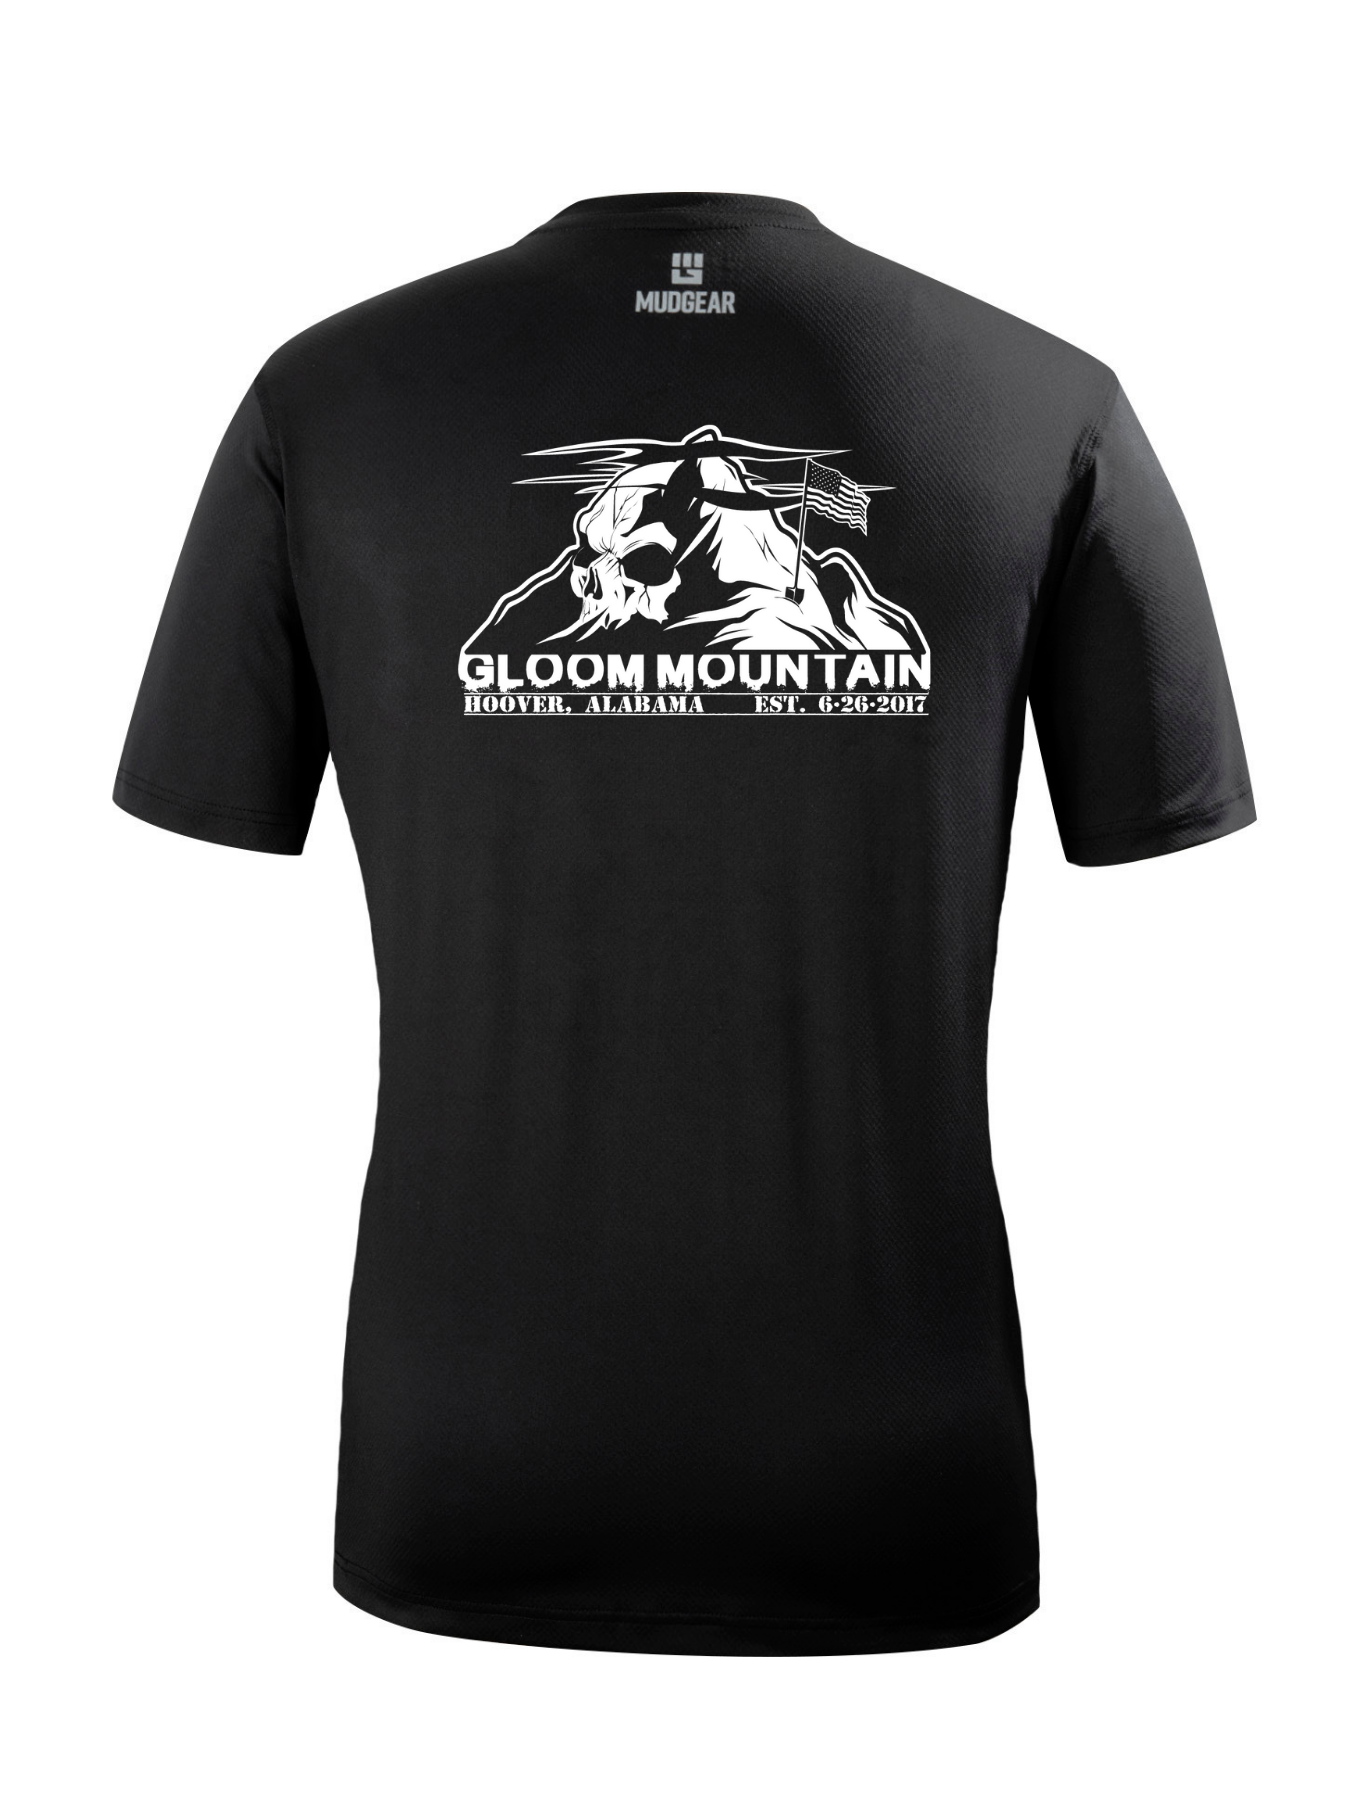 F3 Gloom Mountain Pre-Order July 2022